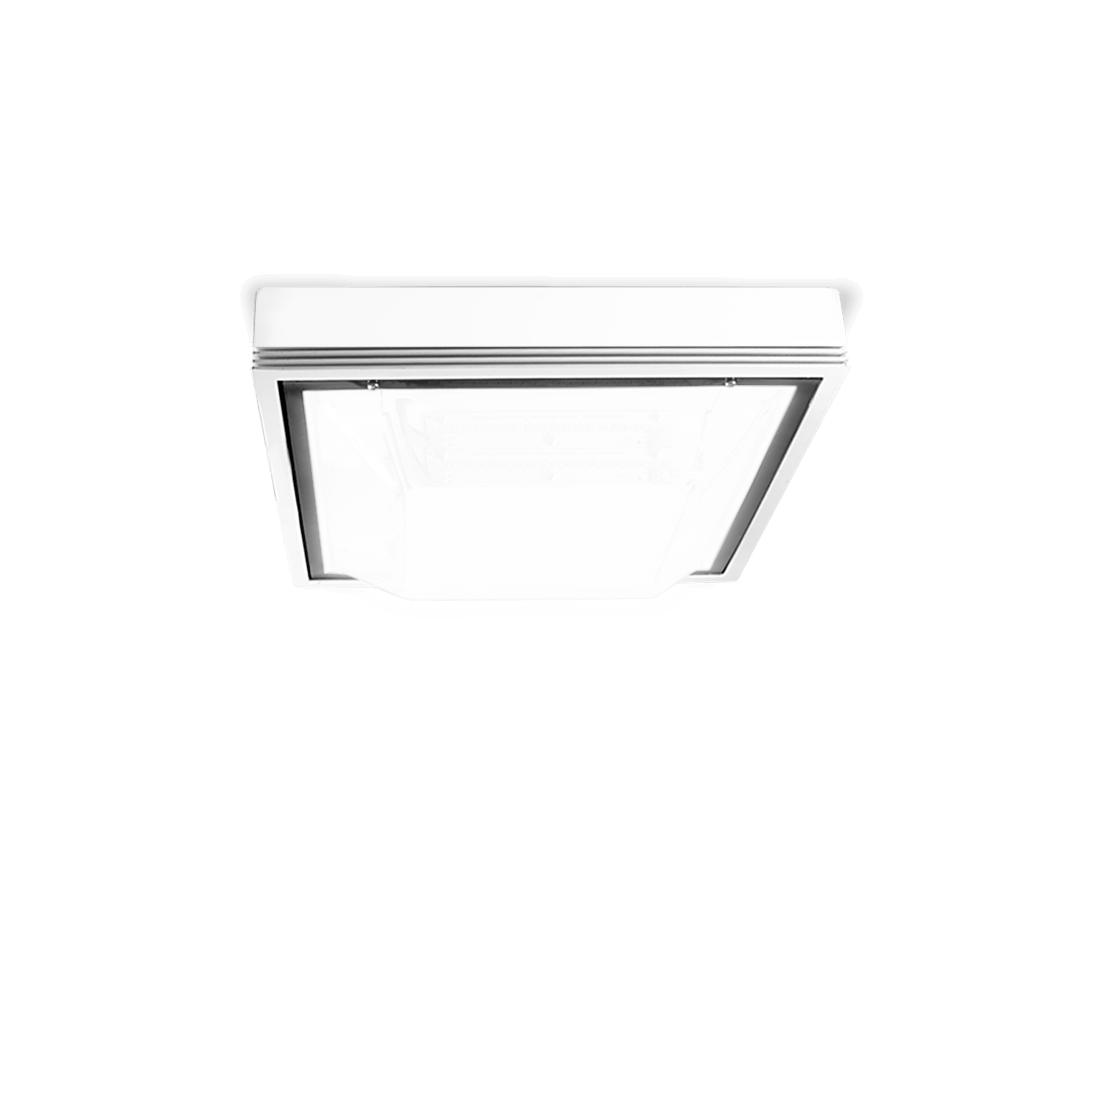 White surface mount style LED fixture